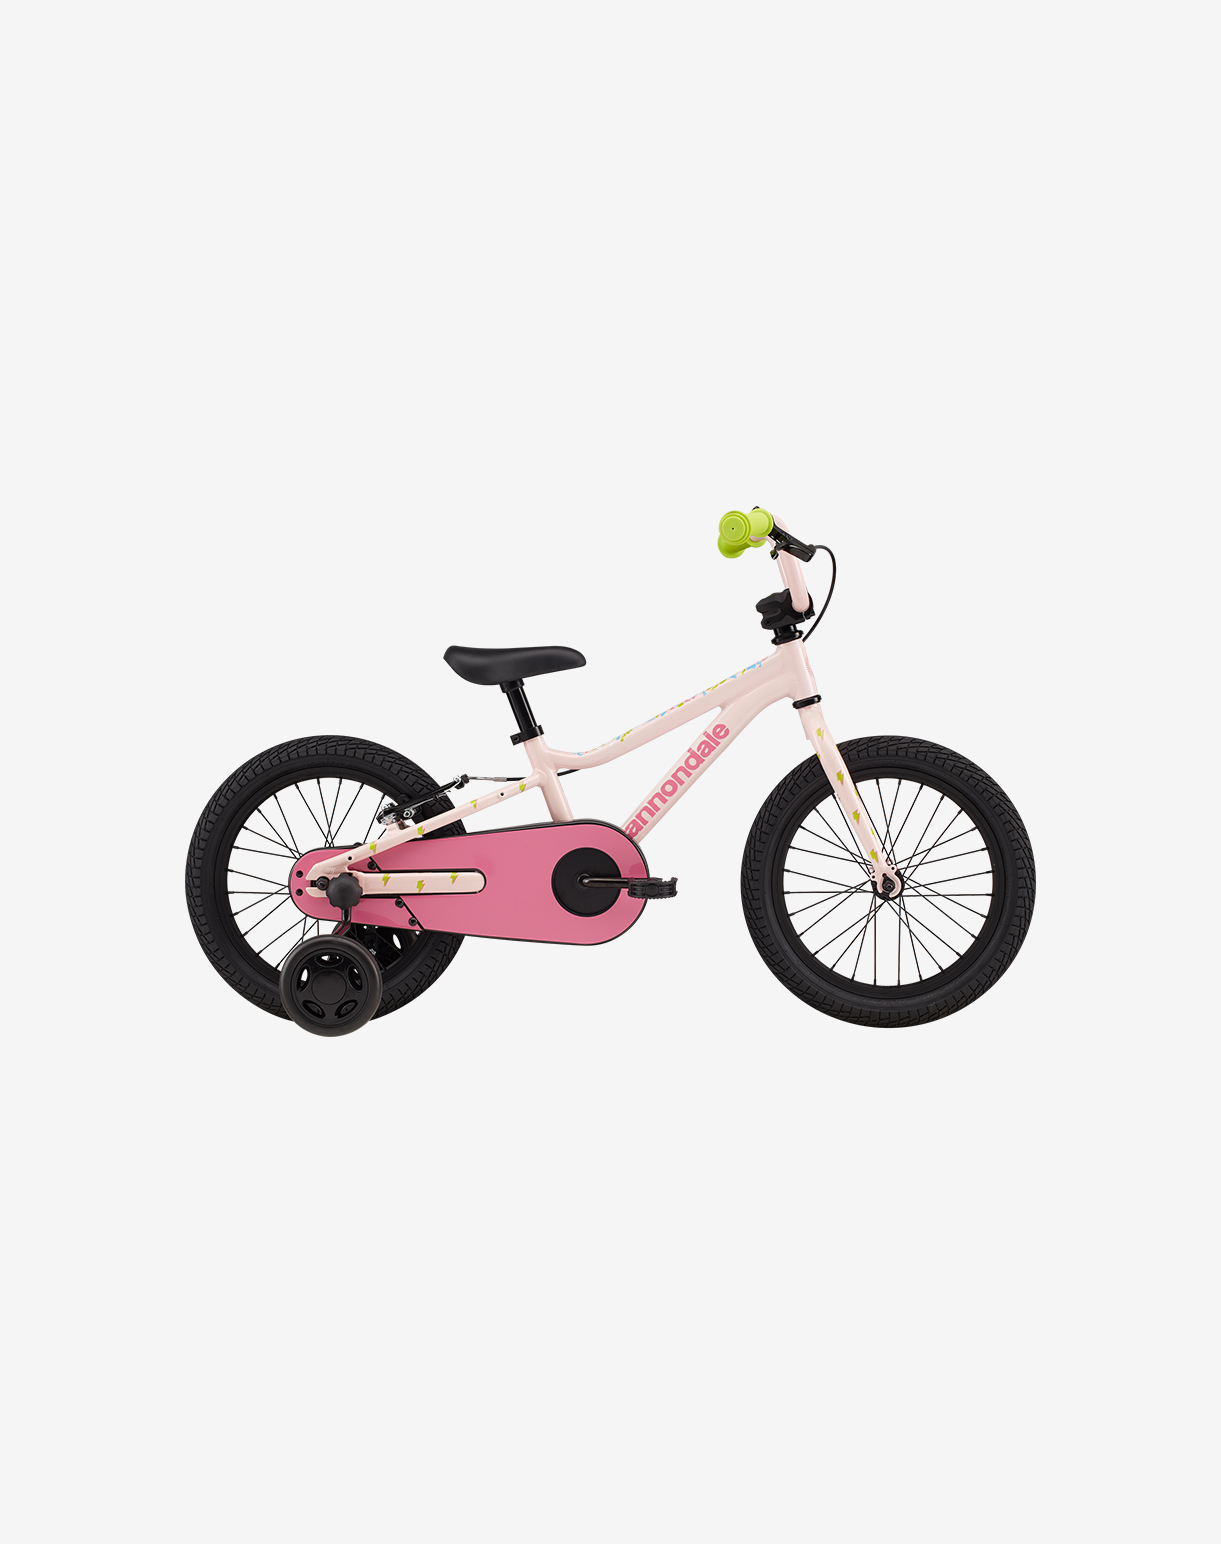 Bicicleta electrica infantil 16 pulgadas